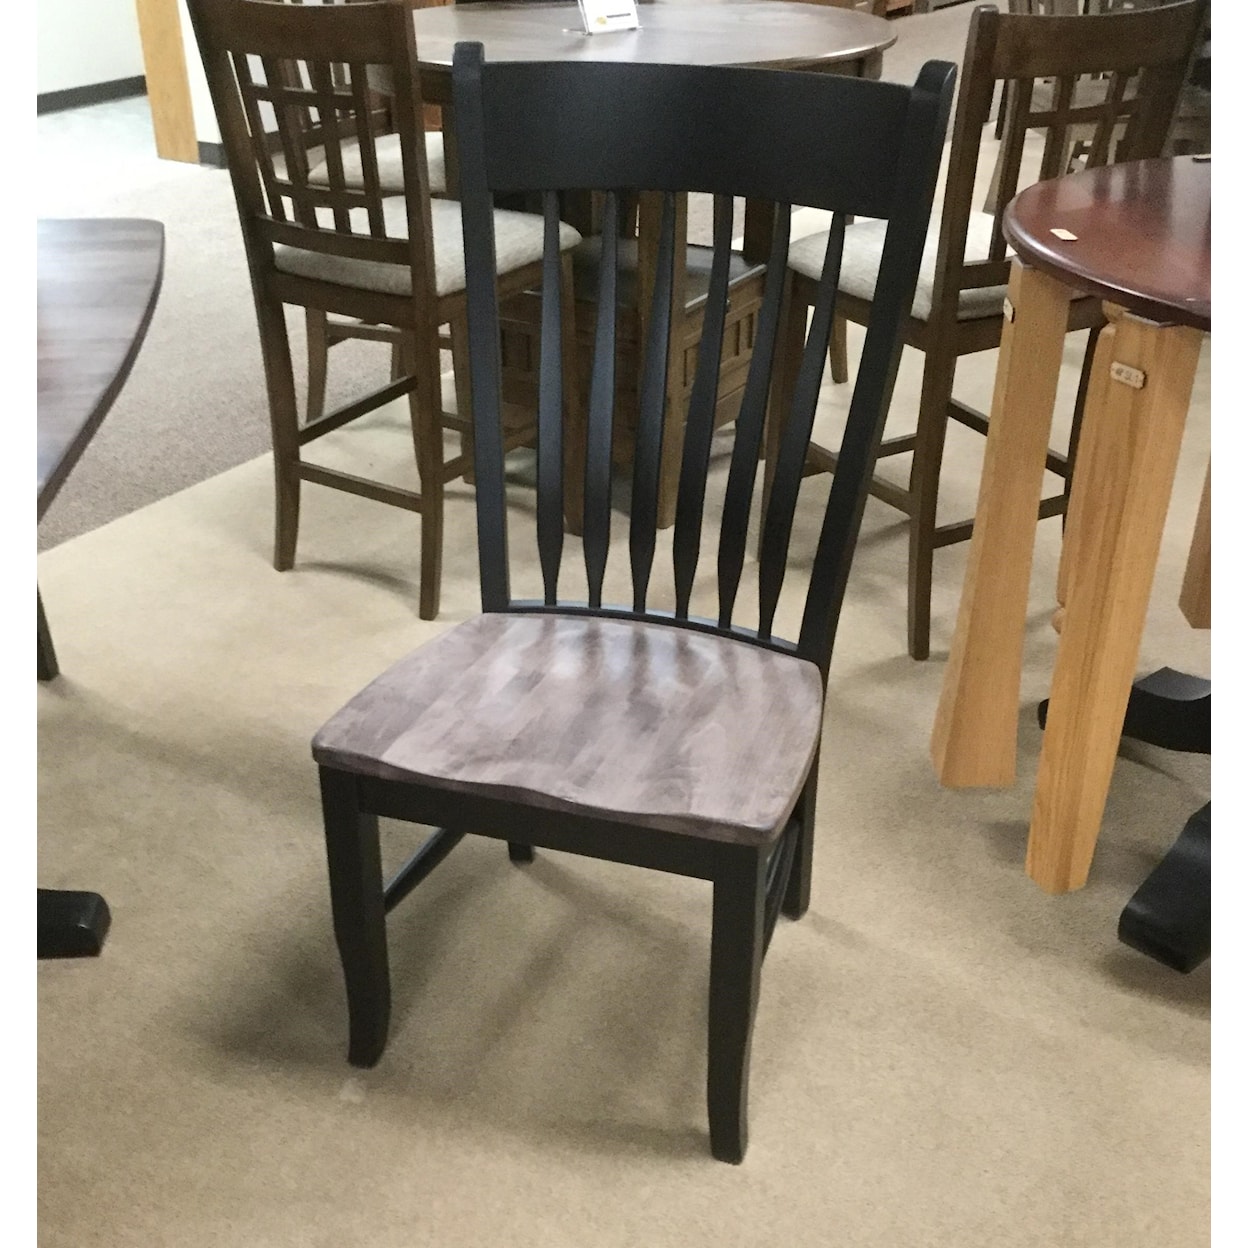 Daniel's Amish Chairs and Barstools Buckeye Side Chair